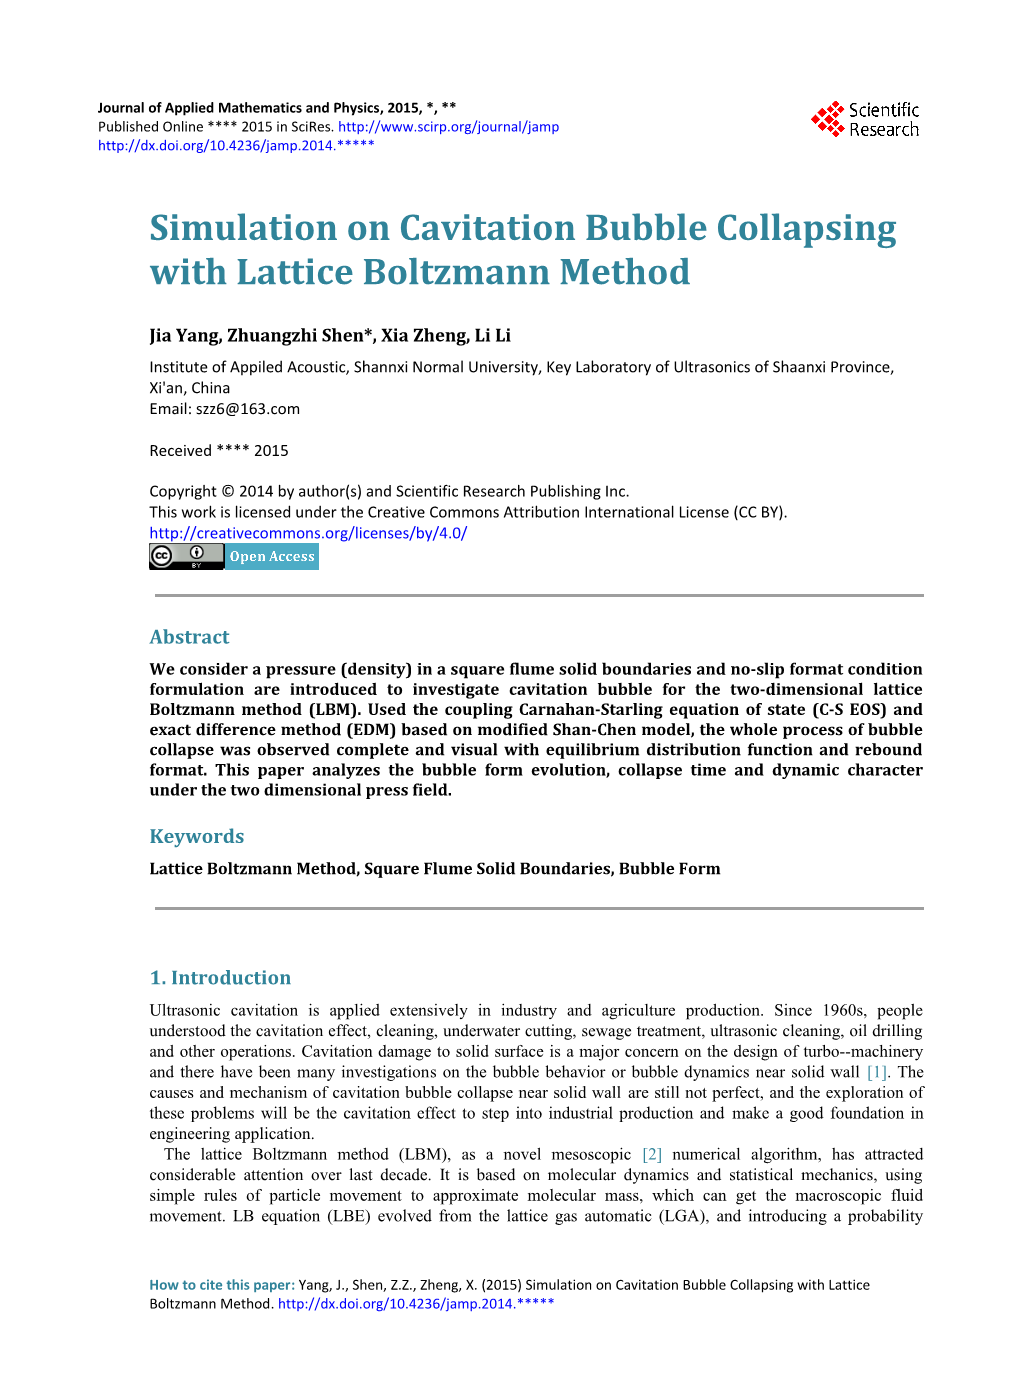 Simulation on Cavitation Bubble Collapsing with Lattice Boltzmann Method